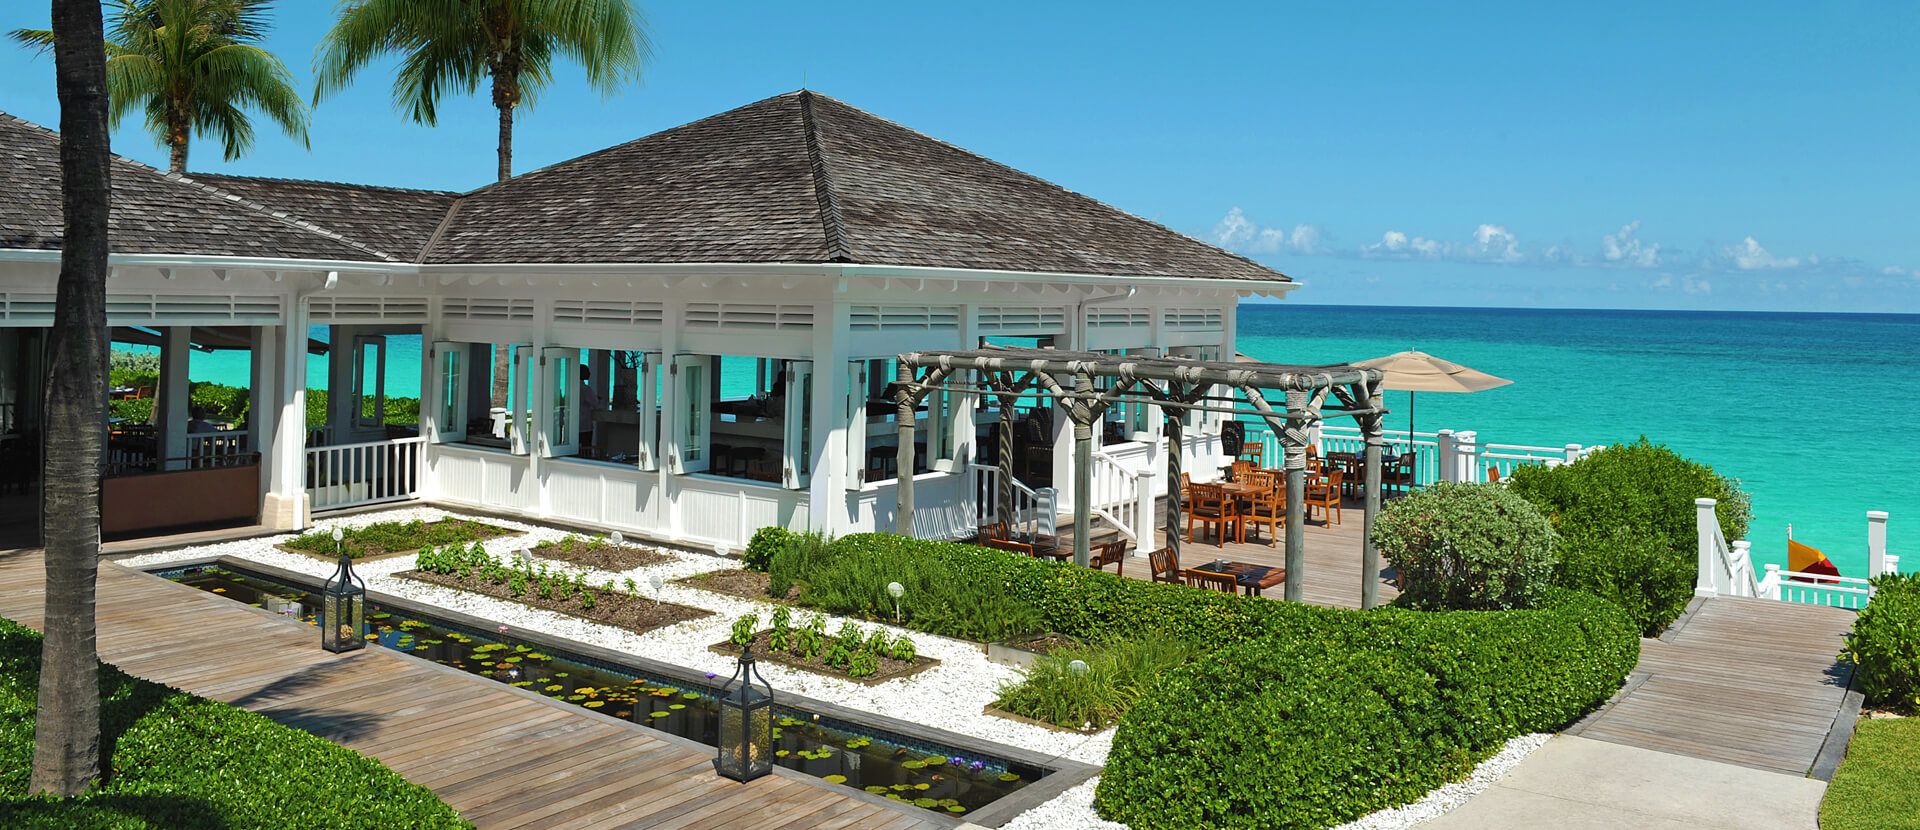 The Ocean Club, A Four Seasons Hotel